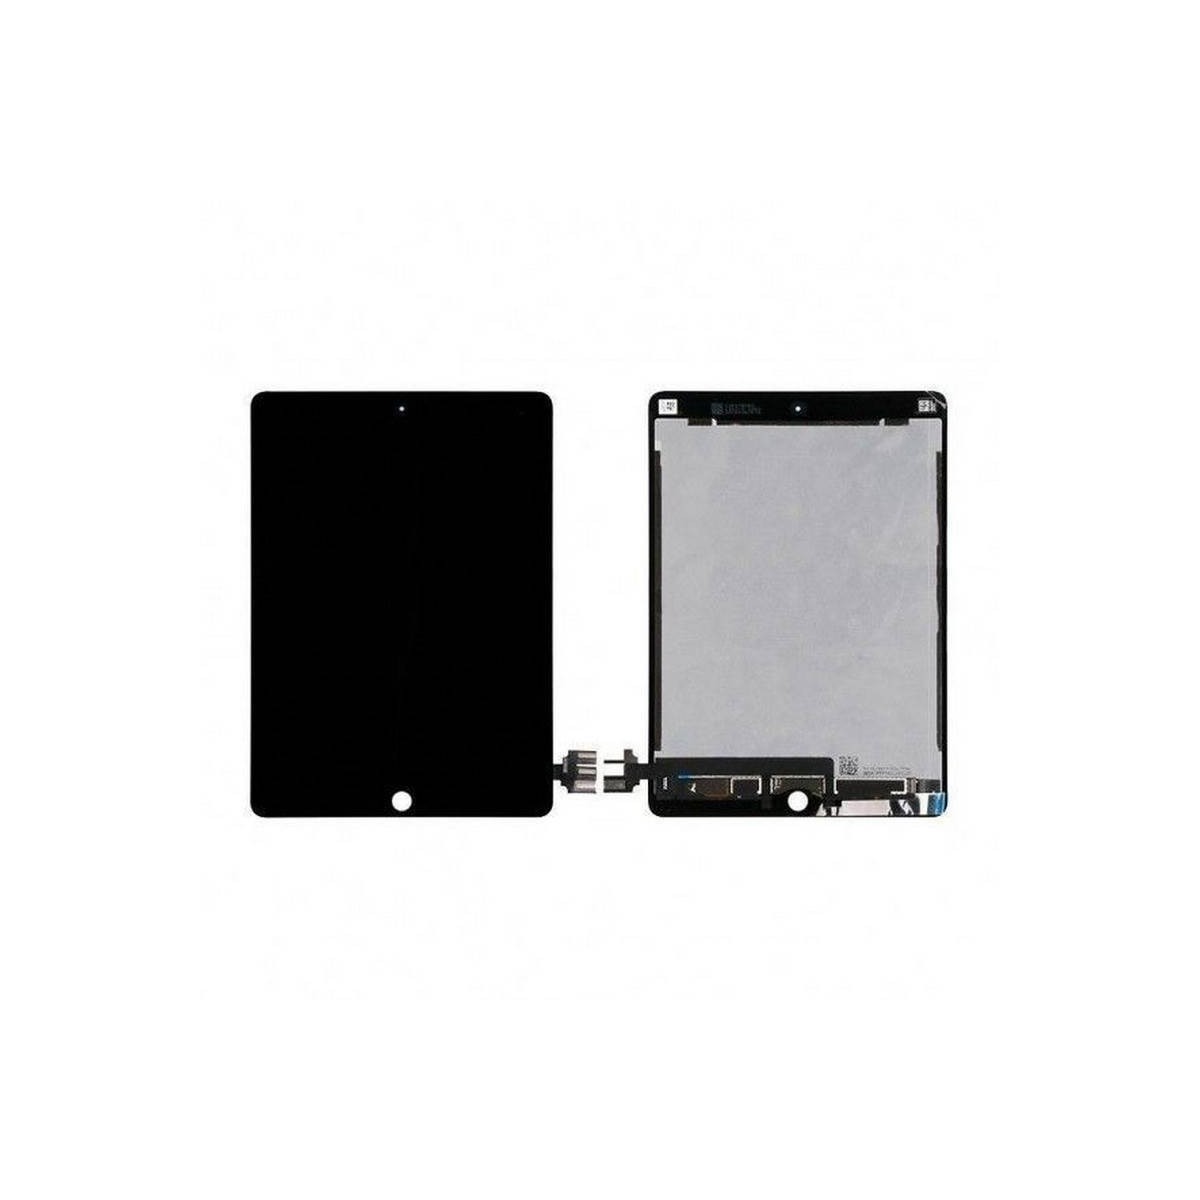 para A1673 A1674 A1675 panel de pantalla táctil Kit de piezas de repuesto para iPad Pro 9.7 2016 de pantalla táctil de repuesto no LCD, sin botón de inicio con negro 